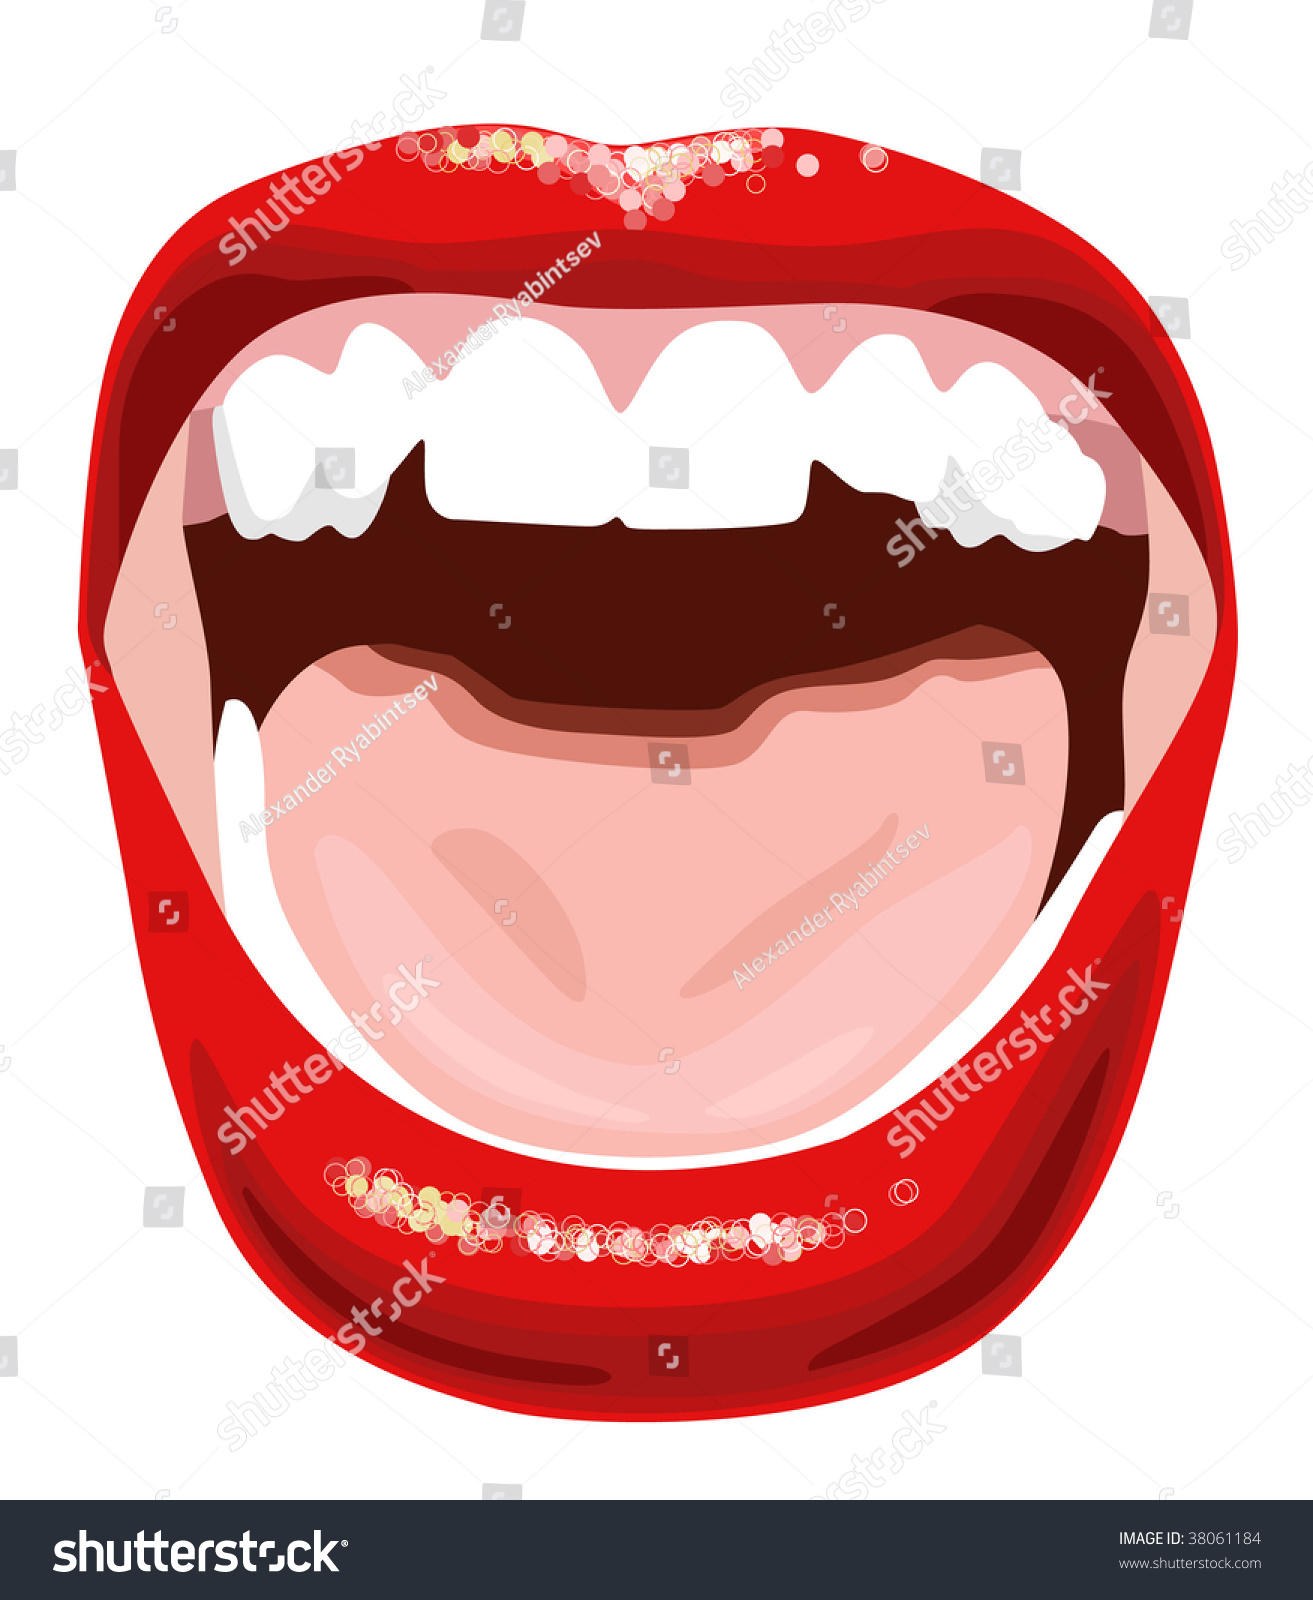 Screaming Mouth Vector Illustration Stock Vector 38061184 - Shutterstock